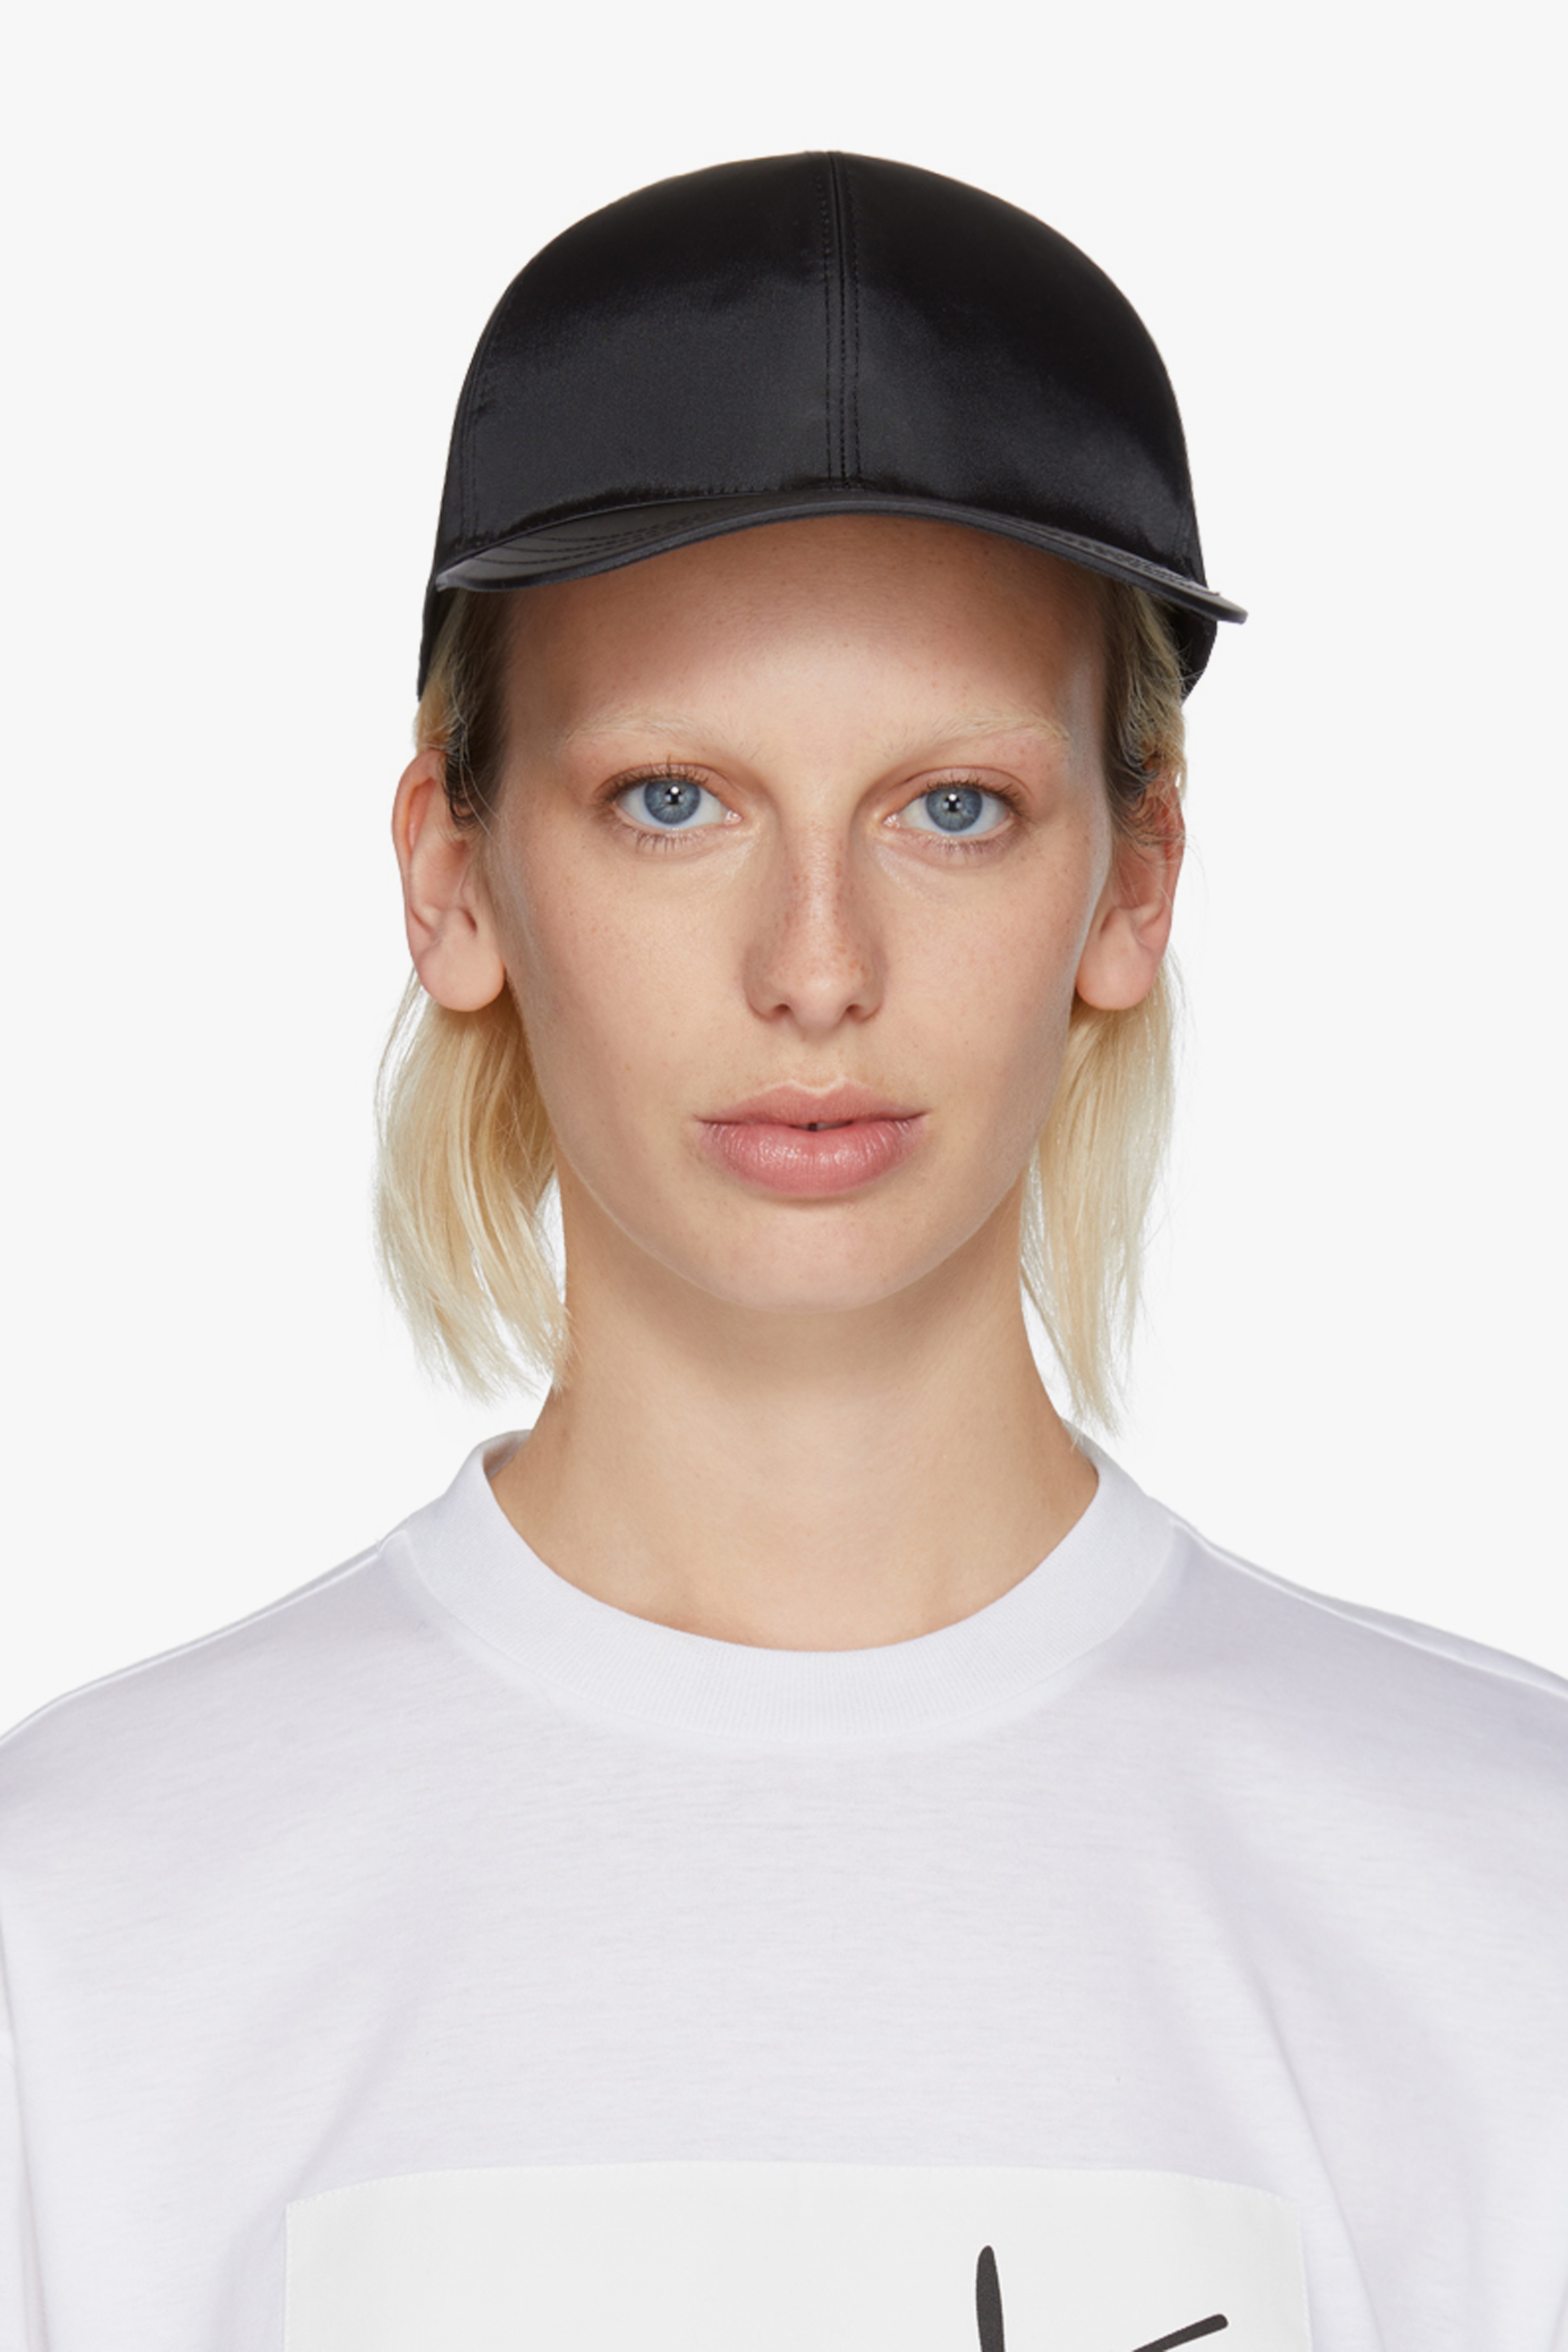 Prada SSENSE Exclusive Capsule Collection T-Shirt Hats Cap Retro